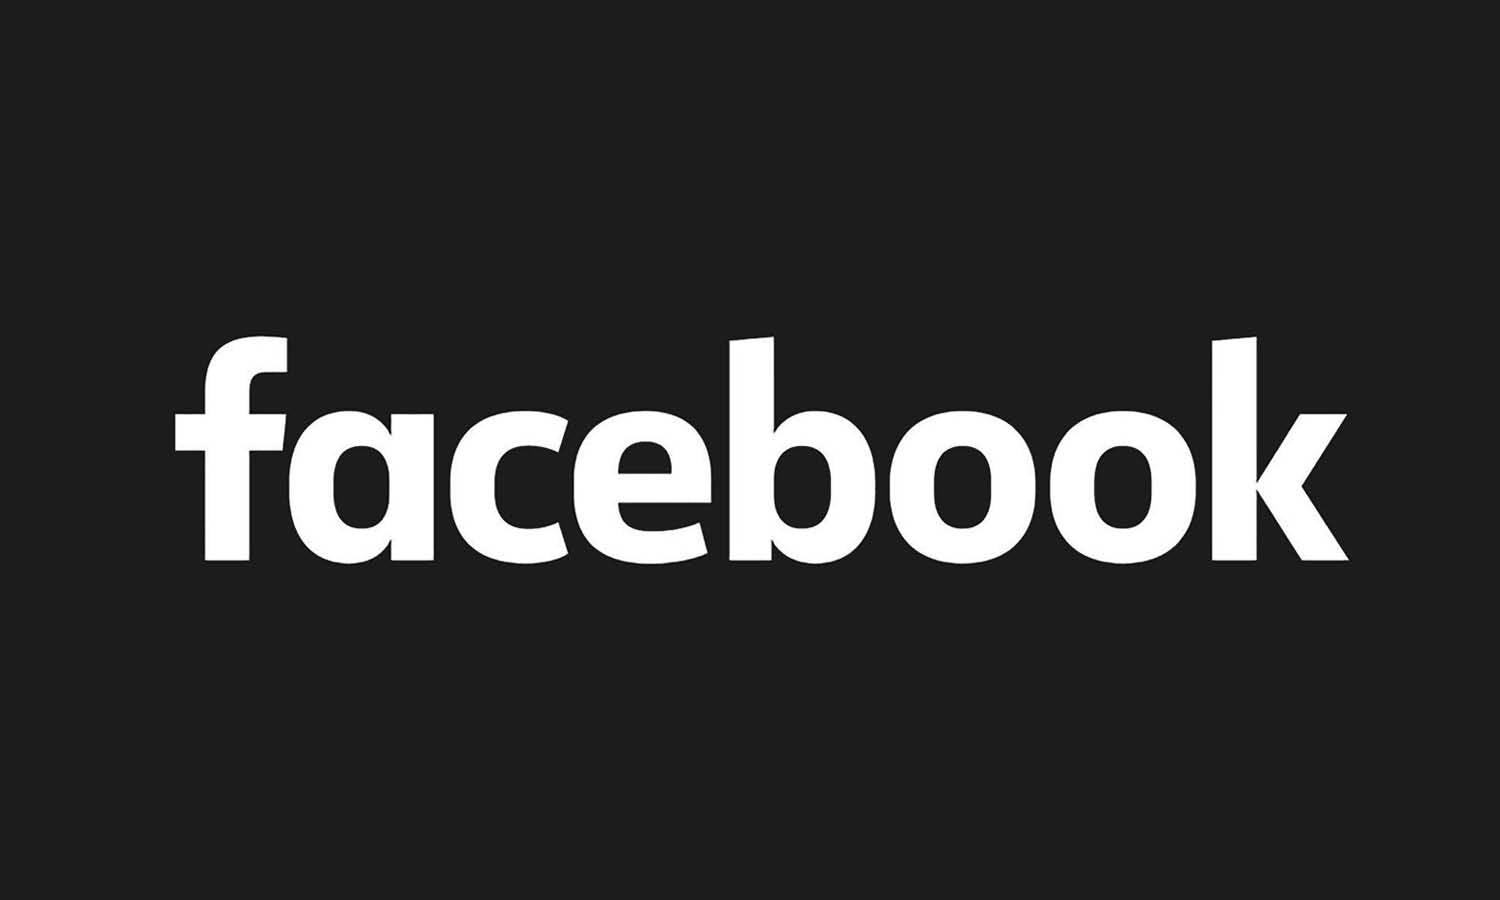 Facebook Logo Design: History & Evolution - Kreafolk